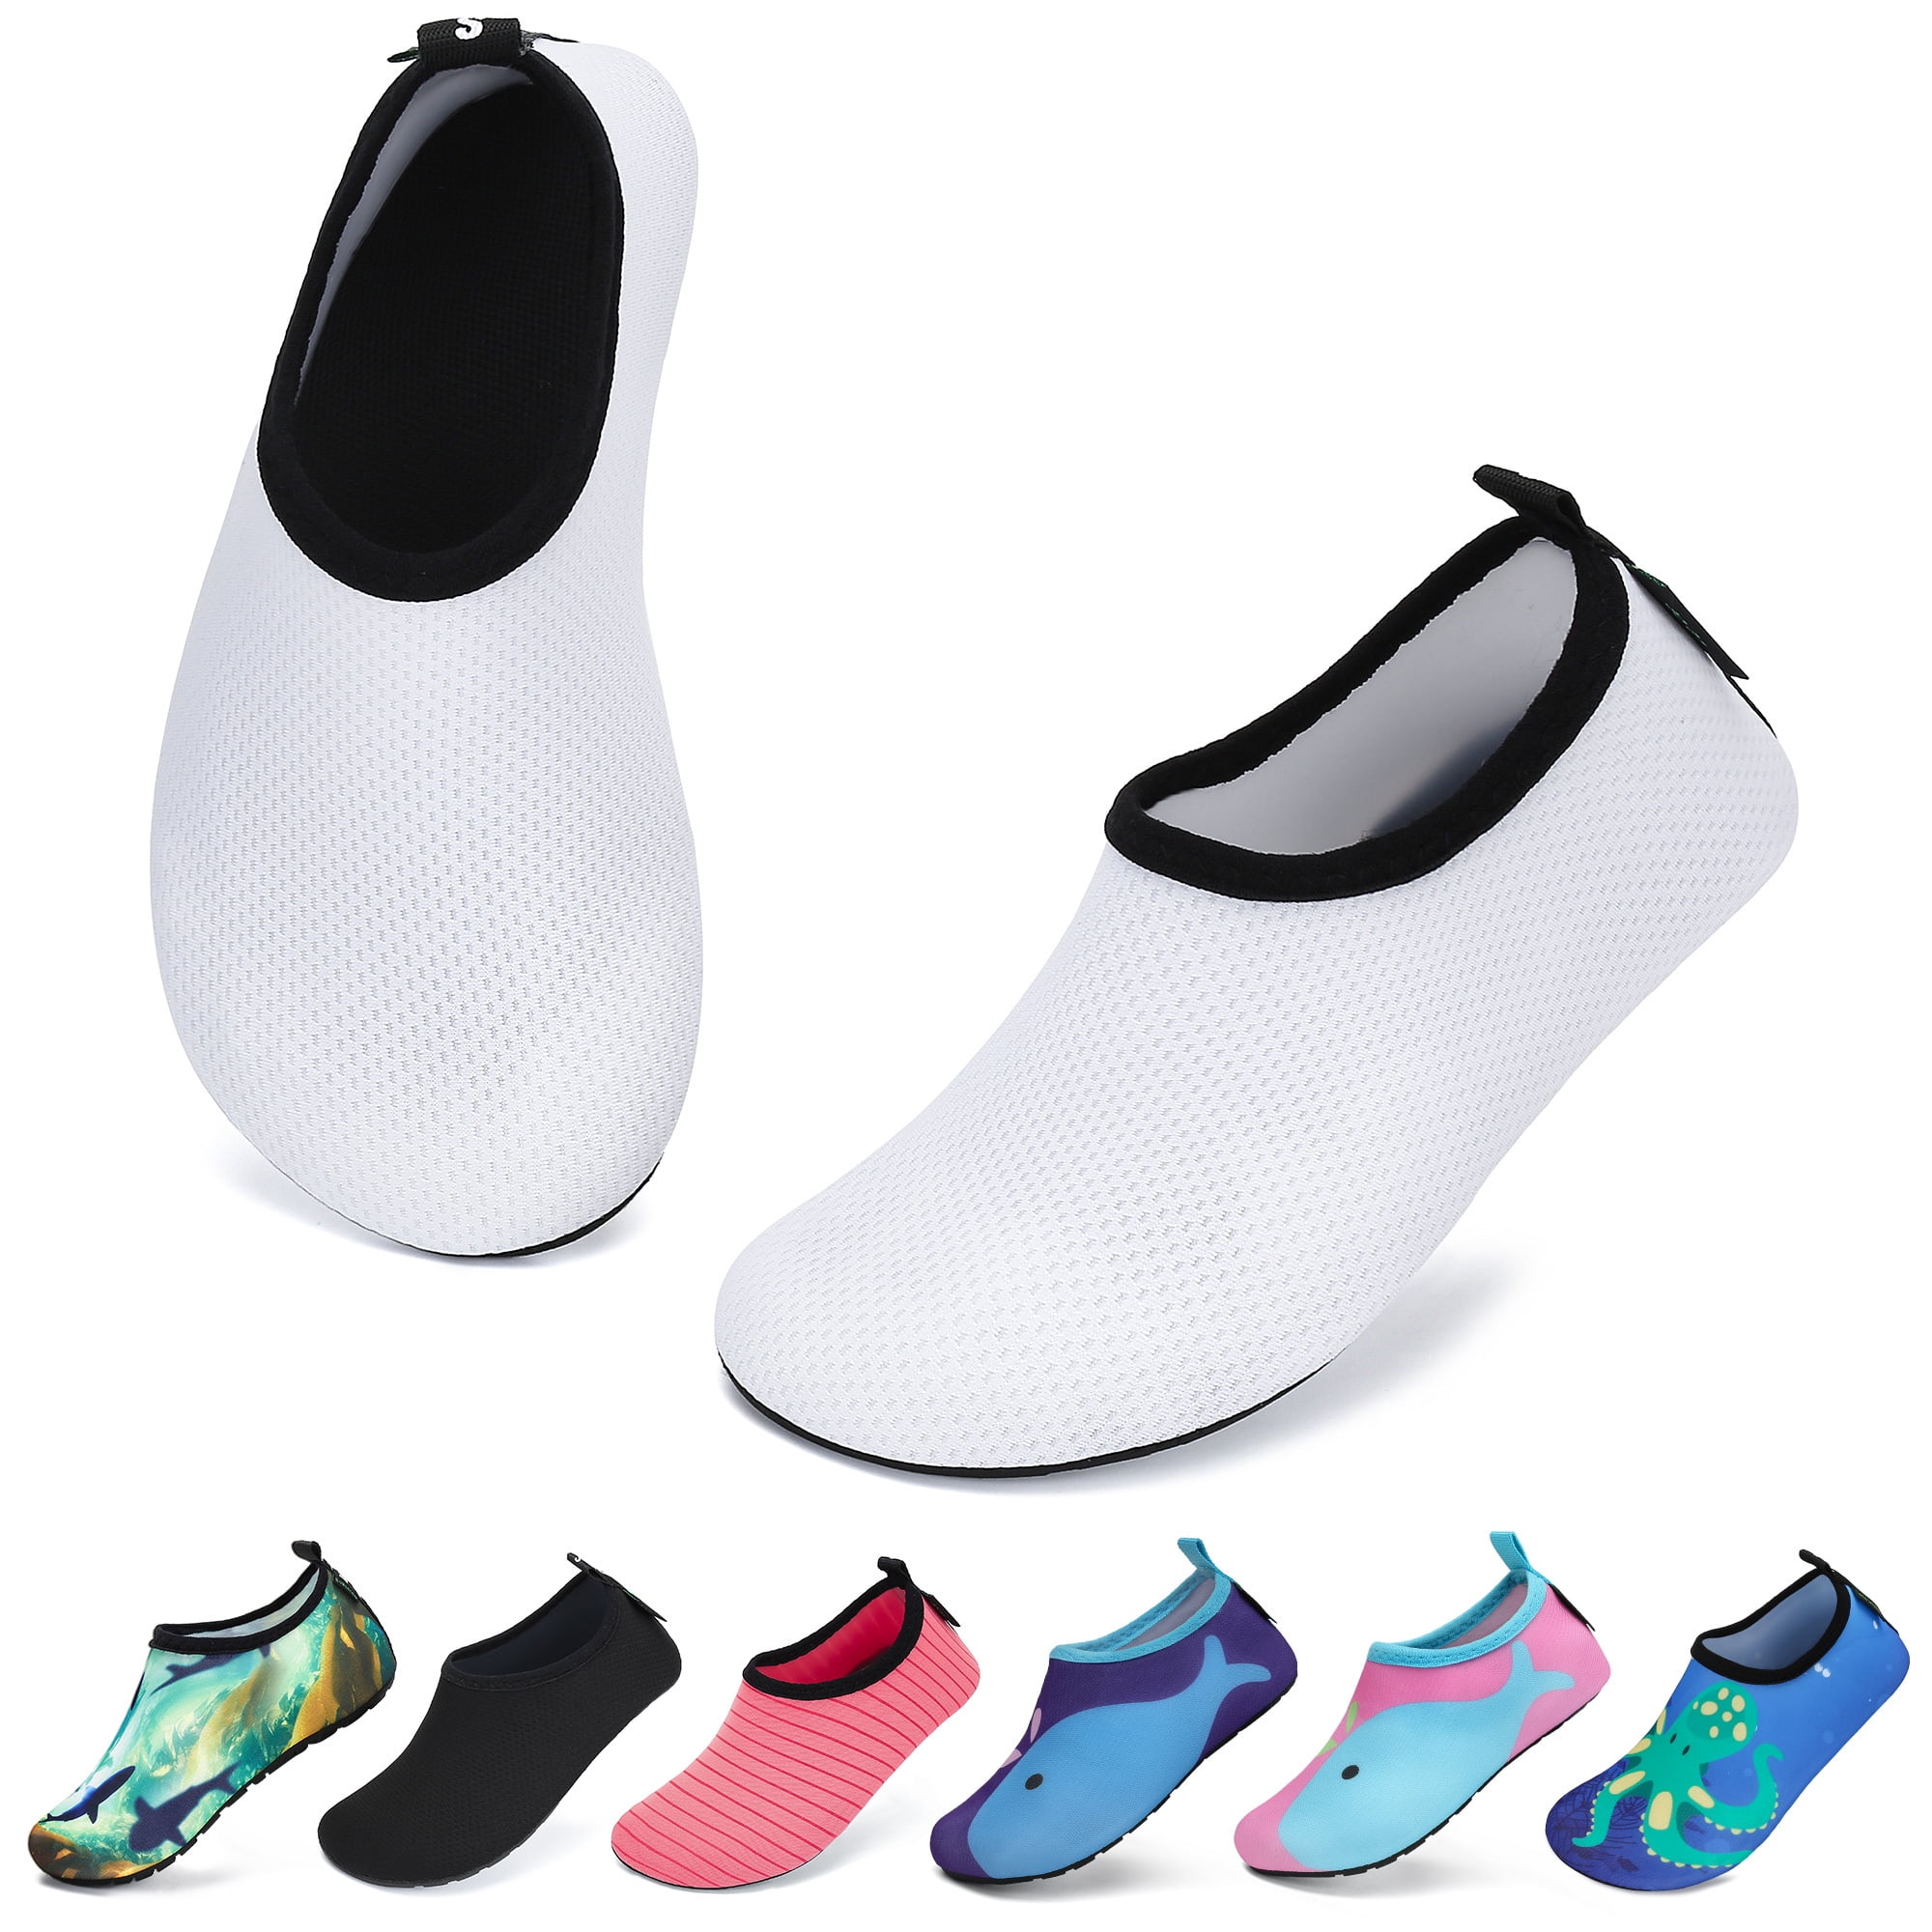 Adult, Unisex SAGUARO Rubber Sole Aqua Water Shoes Summer Durable Skin Socks for Women Men Beach Slipper